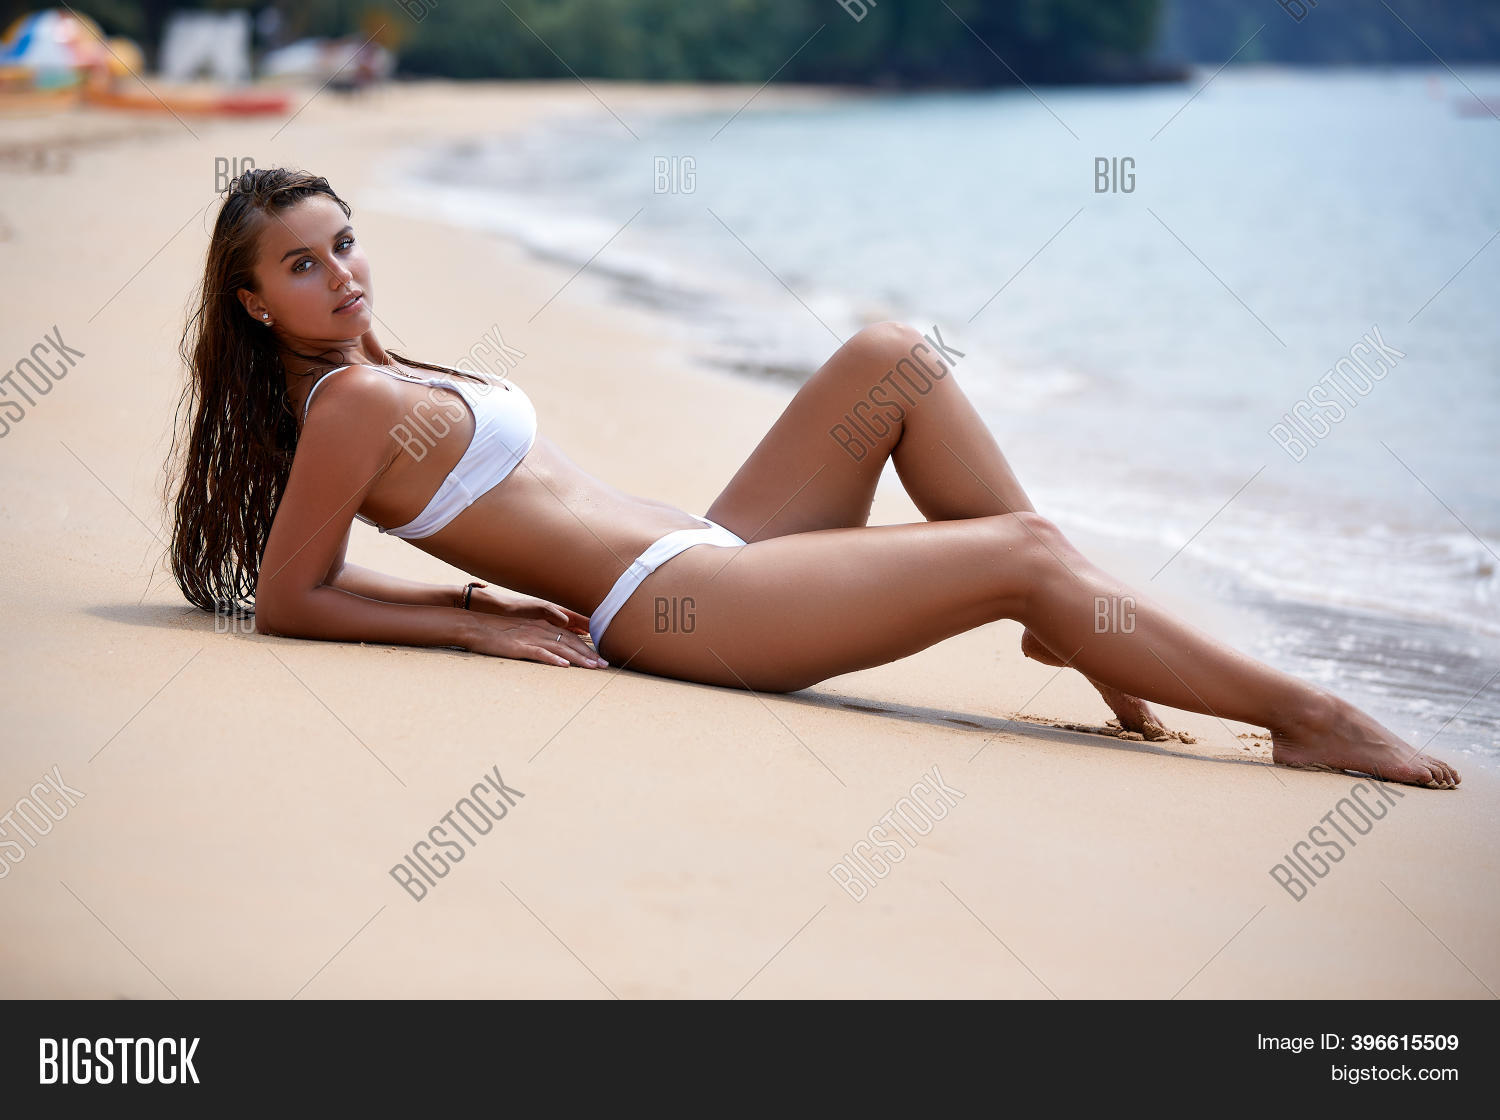 derek dahlstrom share sexy girls at the beach photos